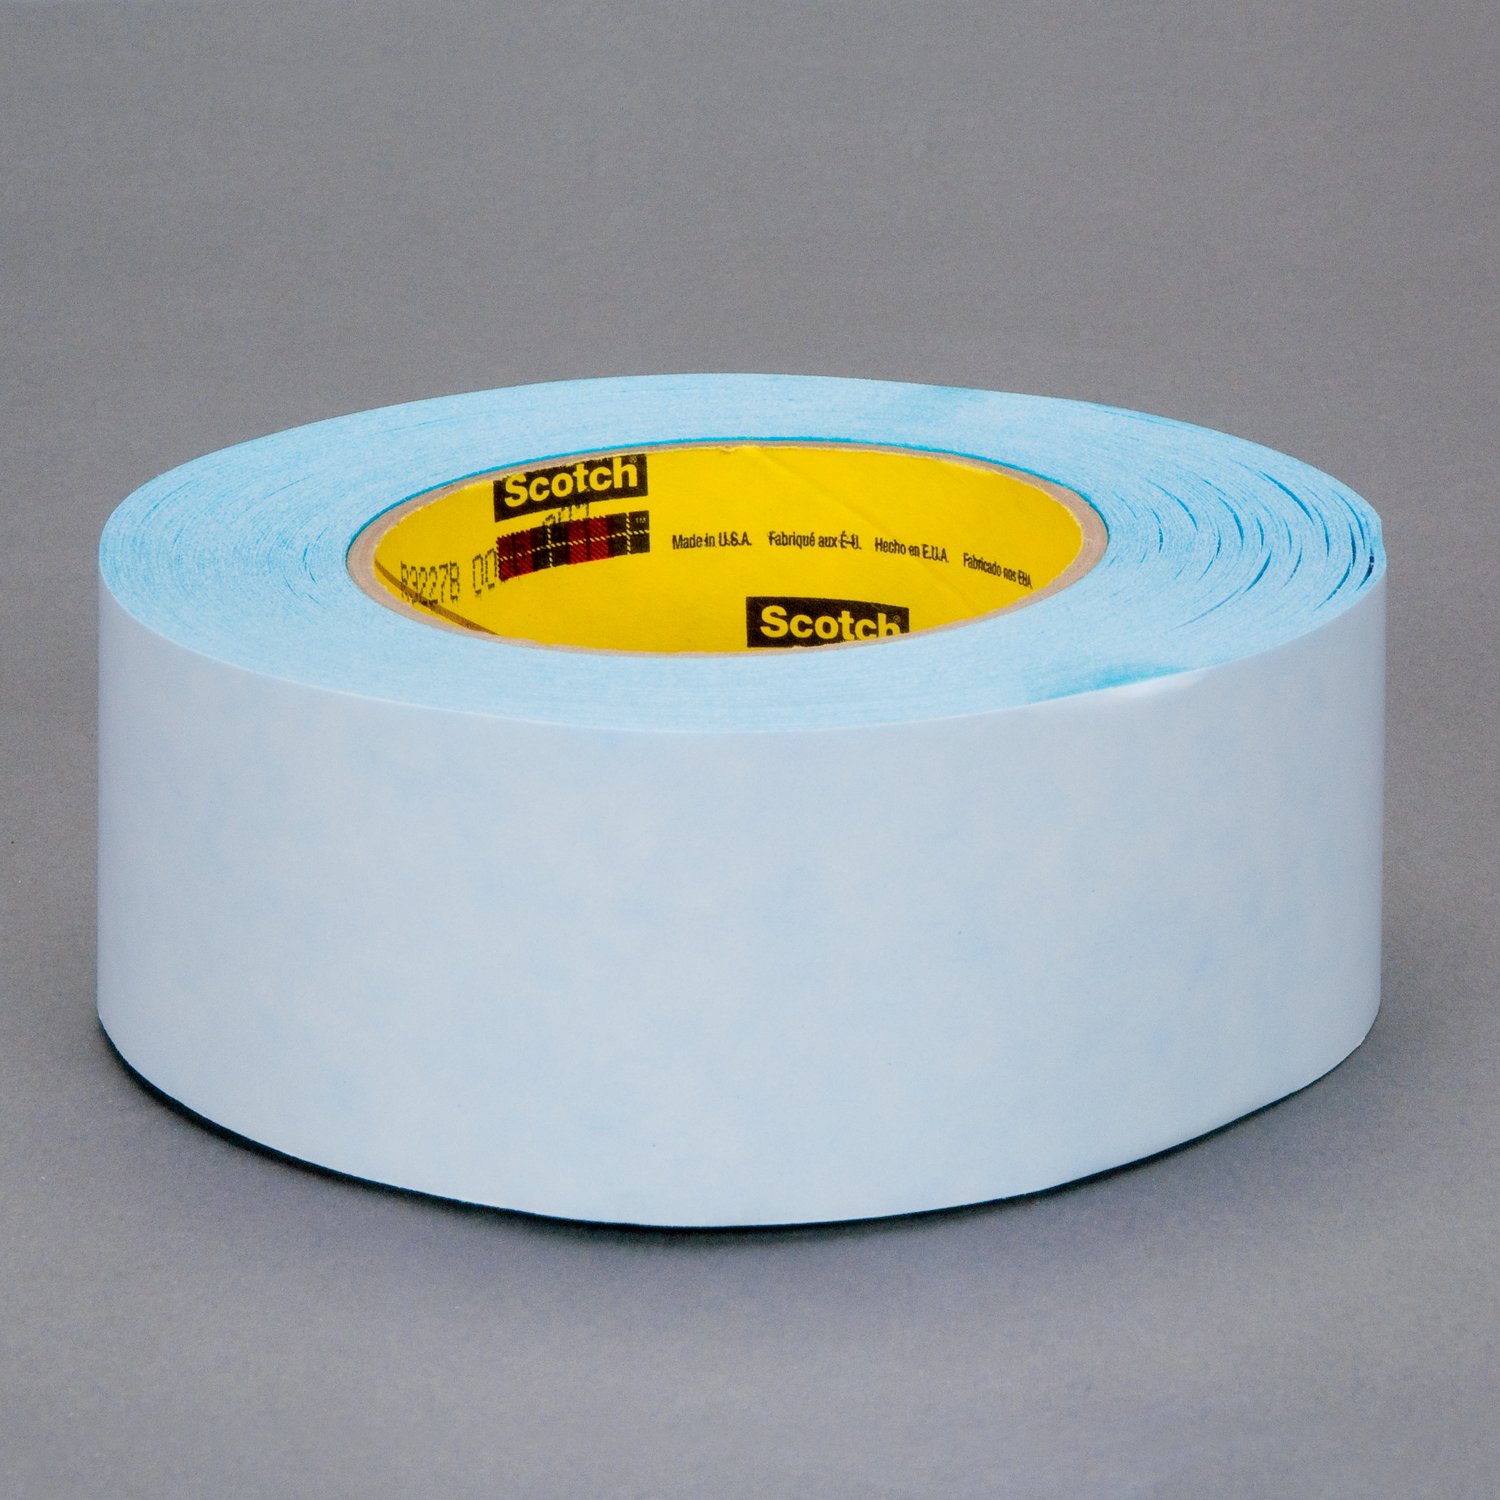 7100028145 - 3M Repulpable Double Coated Tape R3227, Blue, 48 mm x 55 m, 3.5 mil, 24
rolls per case